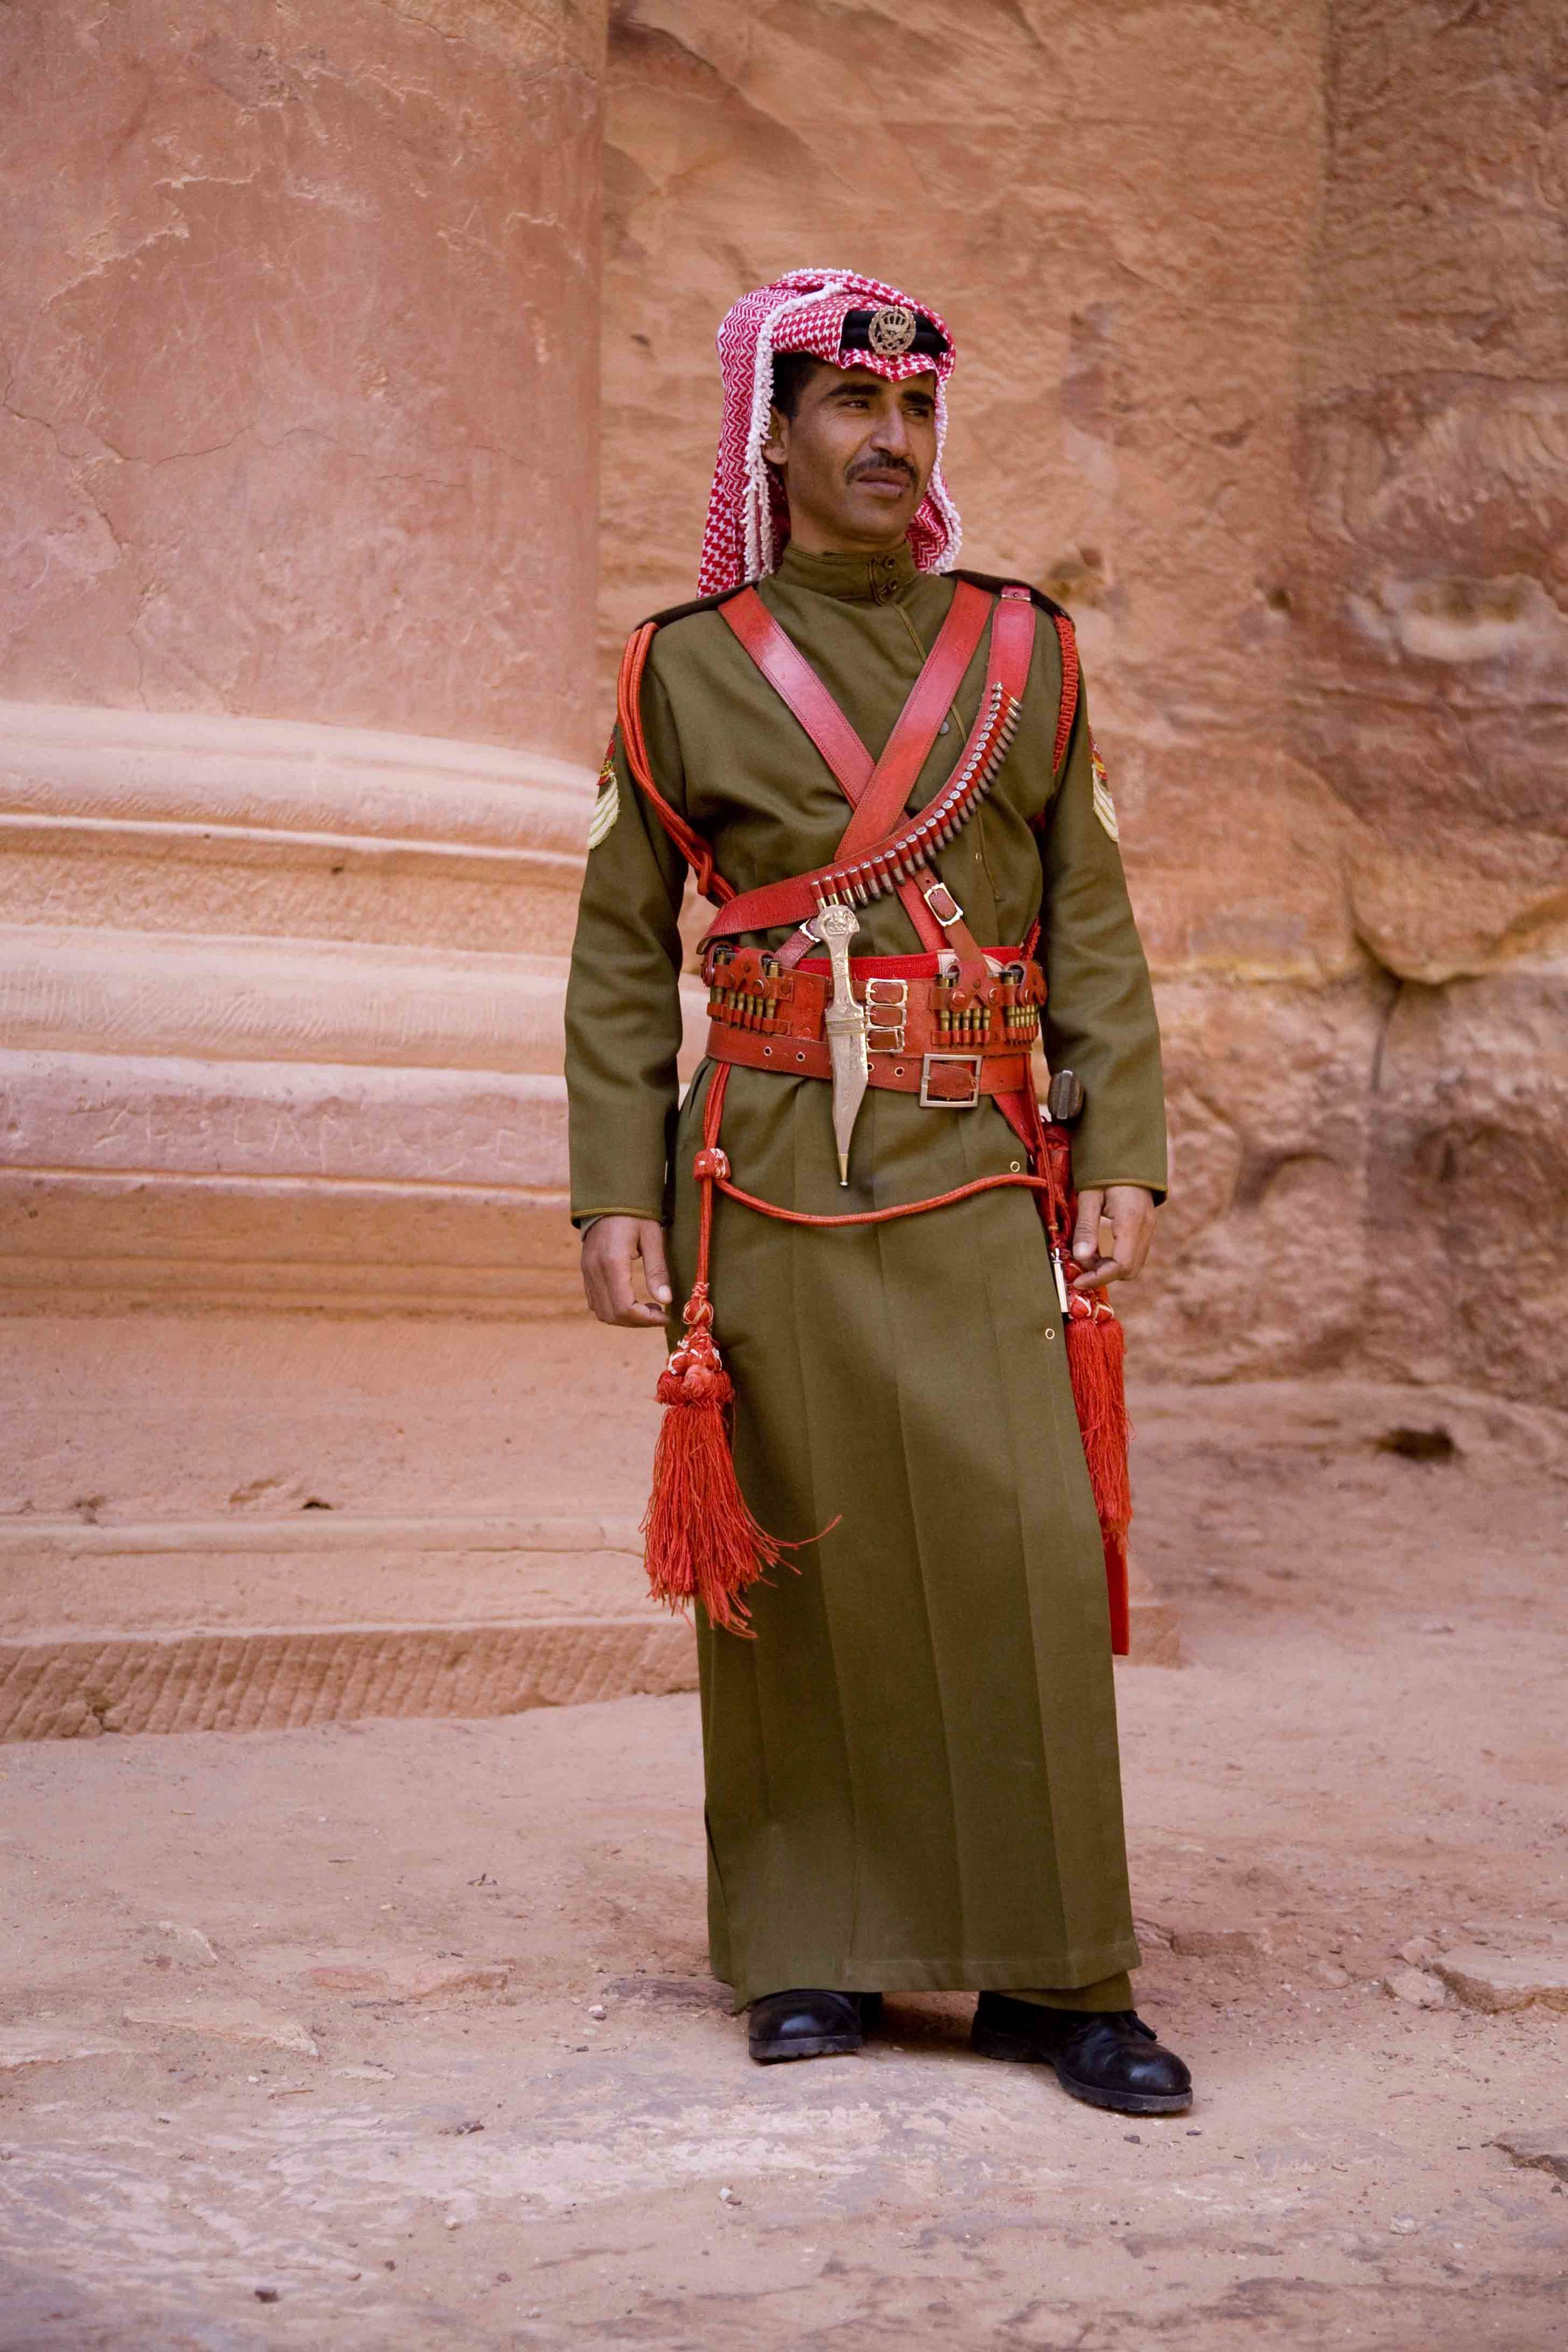 A-Egyptian Guard 1A.jpg